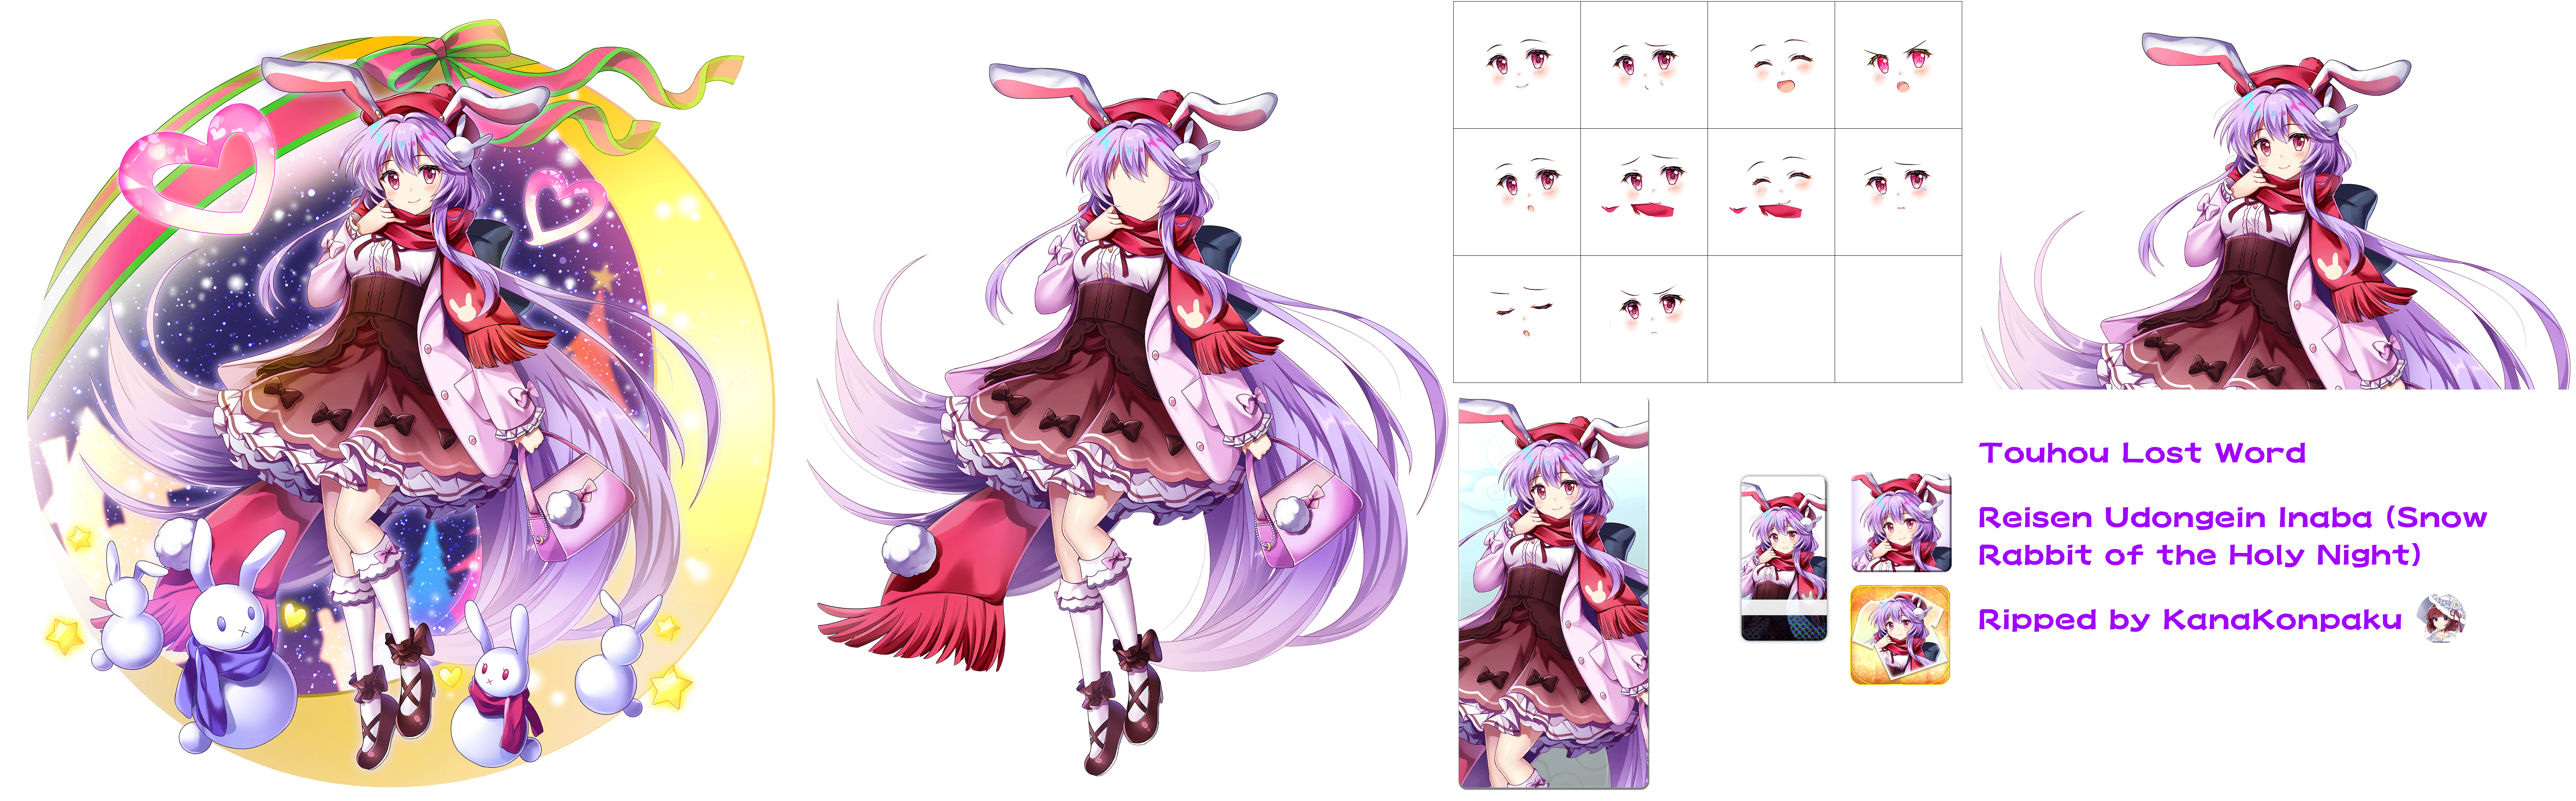 Reisen Udongein Inaba (Snow Rabbit of the Holy Night)